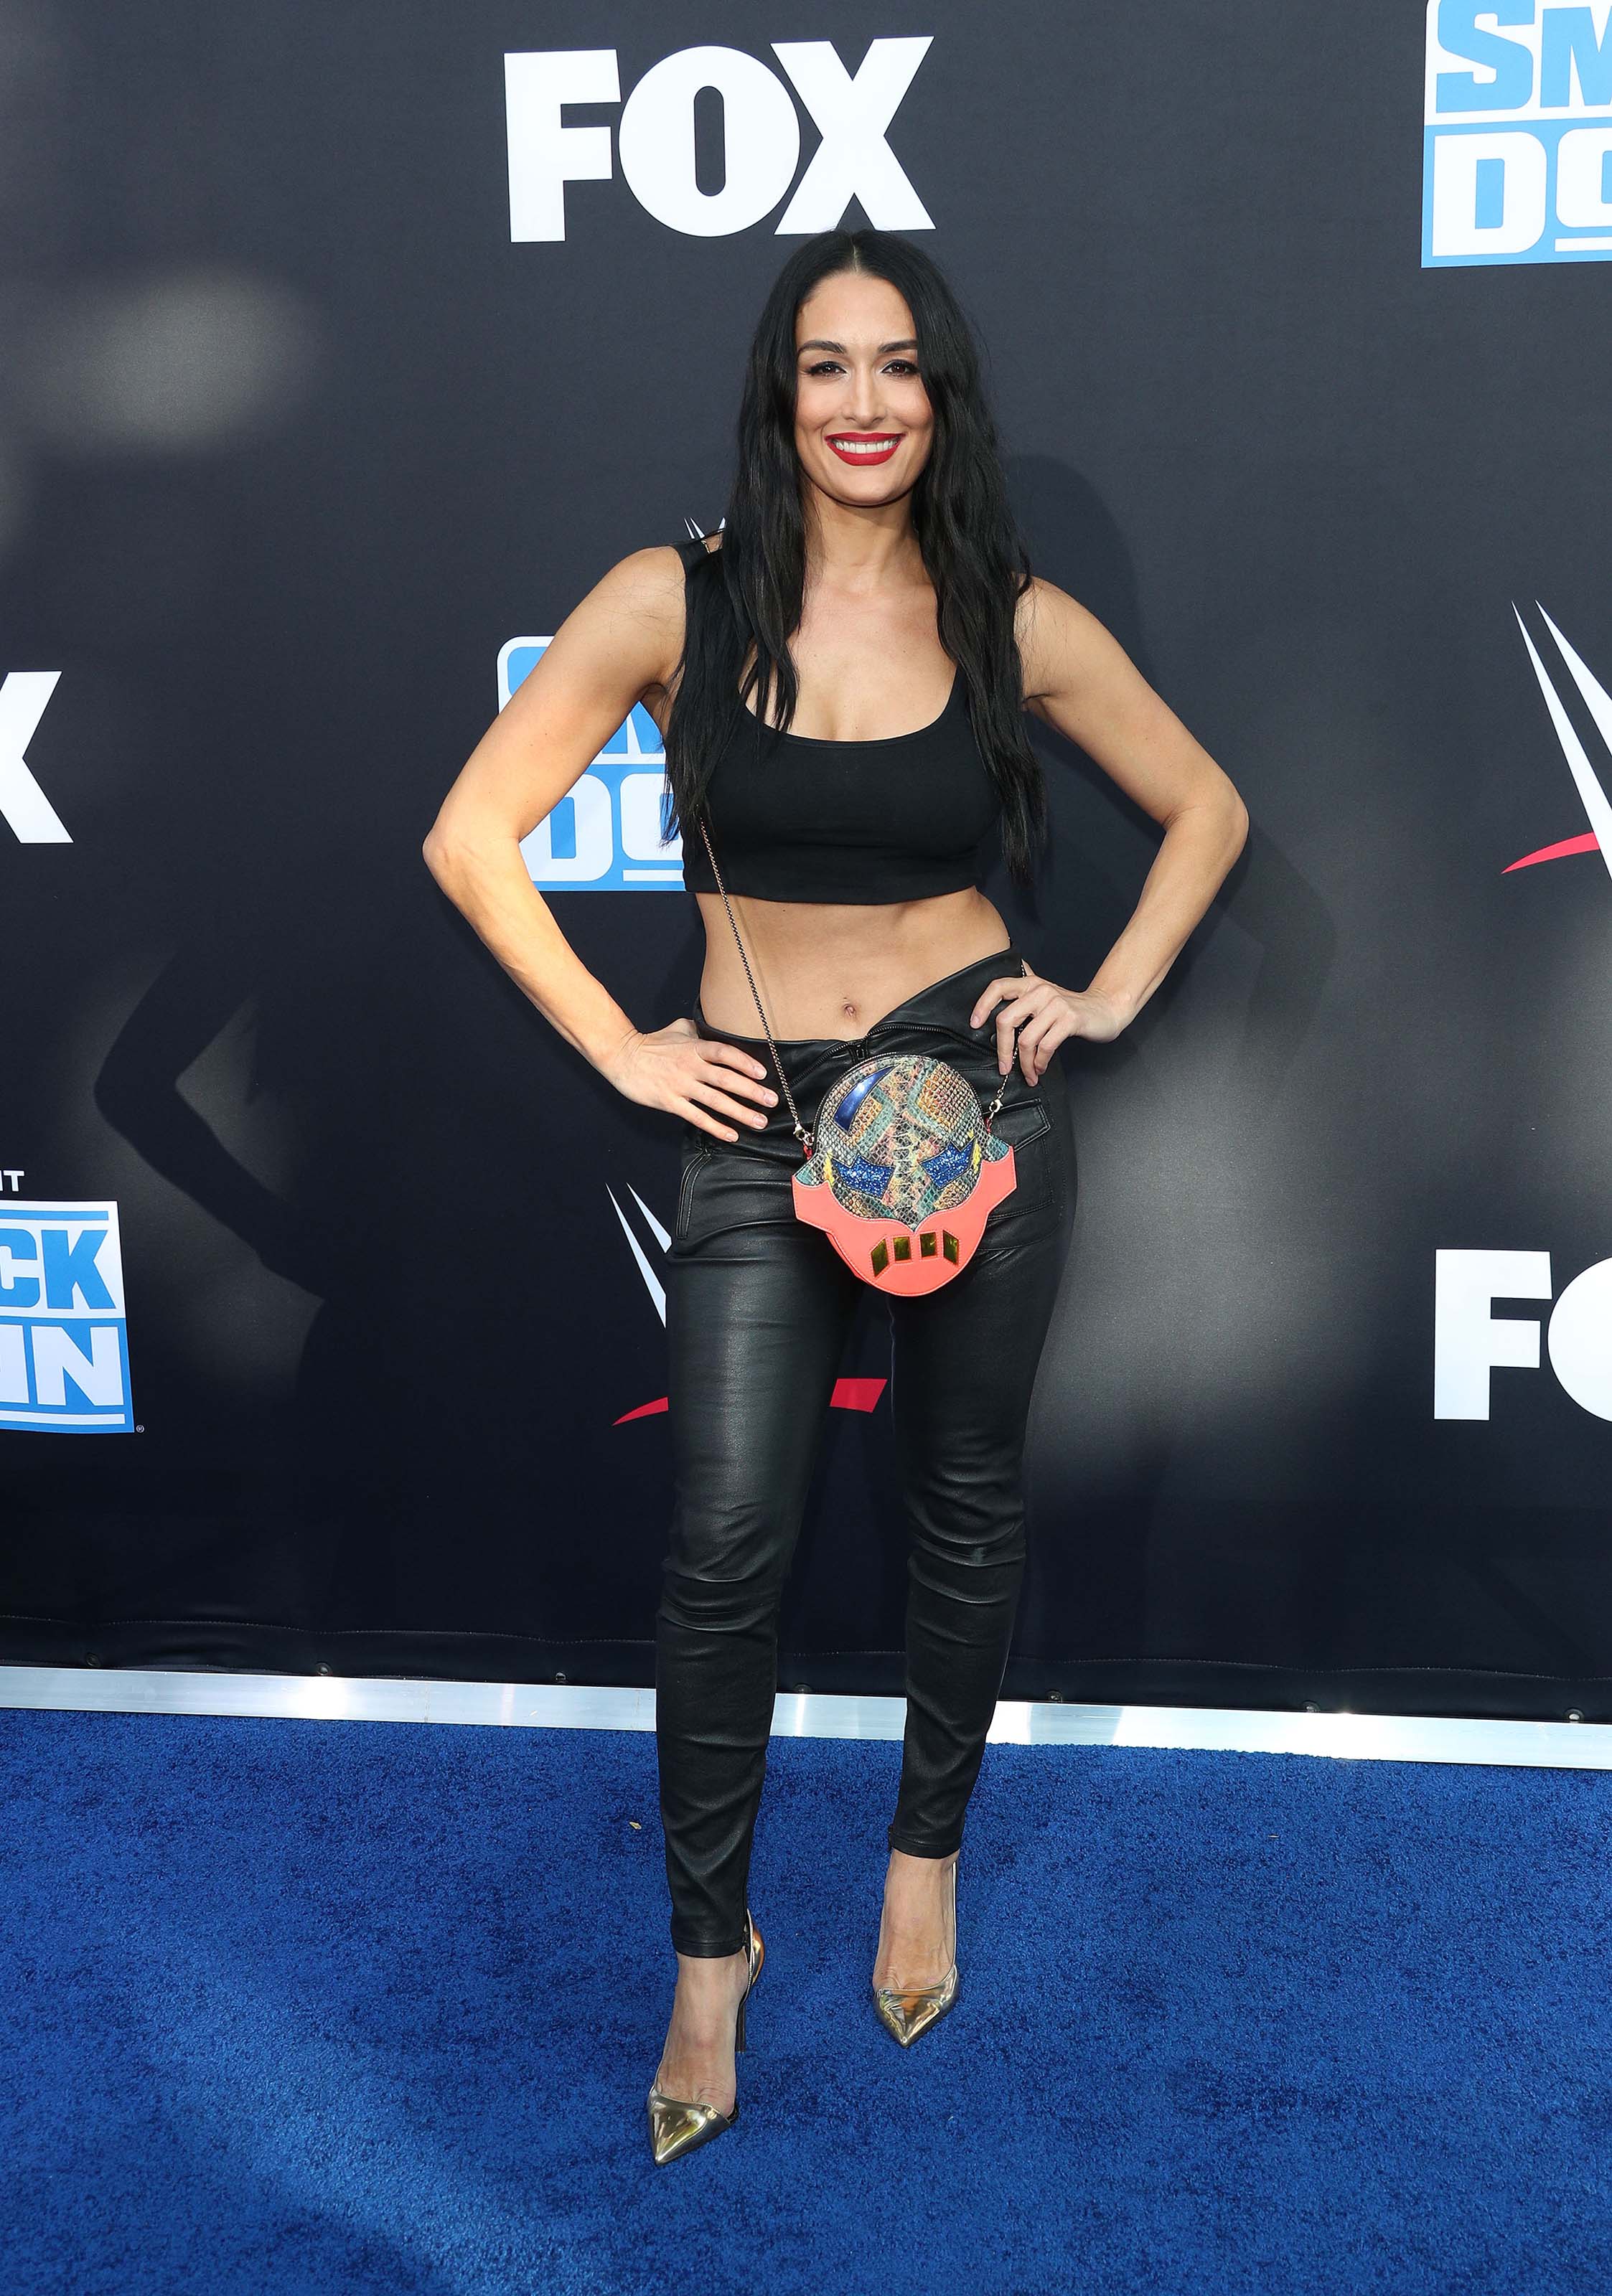 Nikki Bella attends WWE 20th Anniversary Celebration Marking Premiere of WWE Friday Night SmackDown